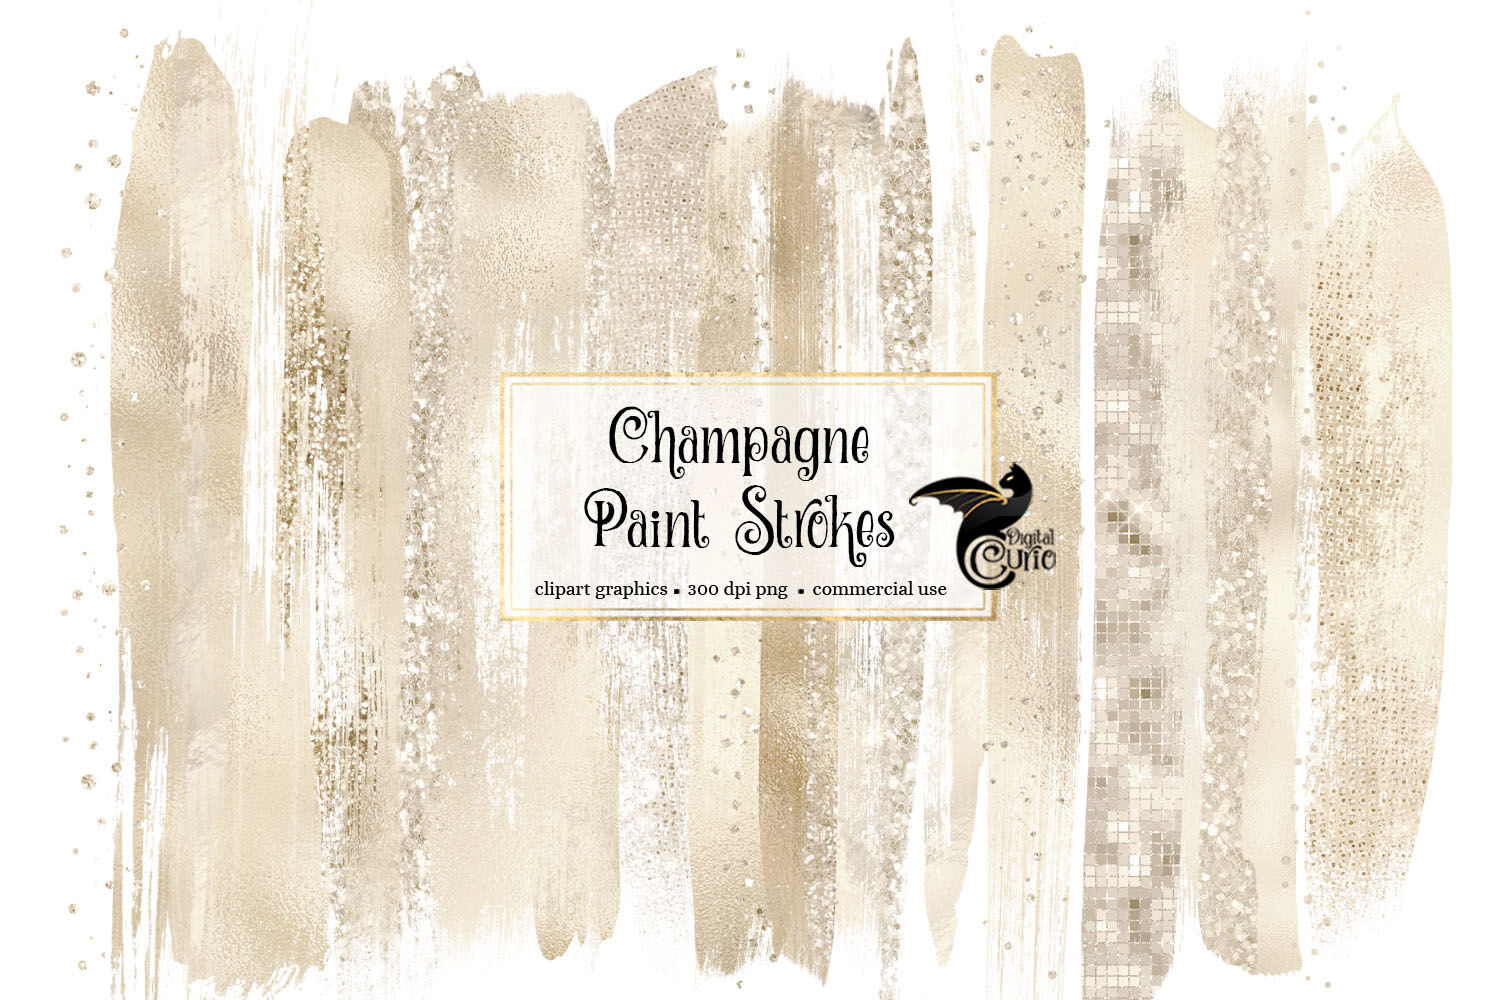 Champagne Brush Strokes Clipart By Digital Curio Thehungryjpeg Com